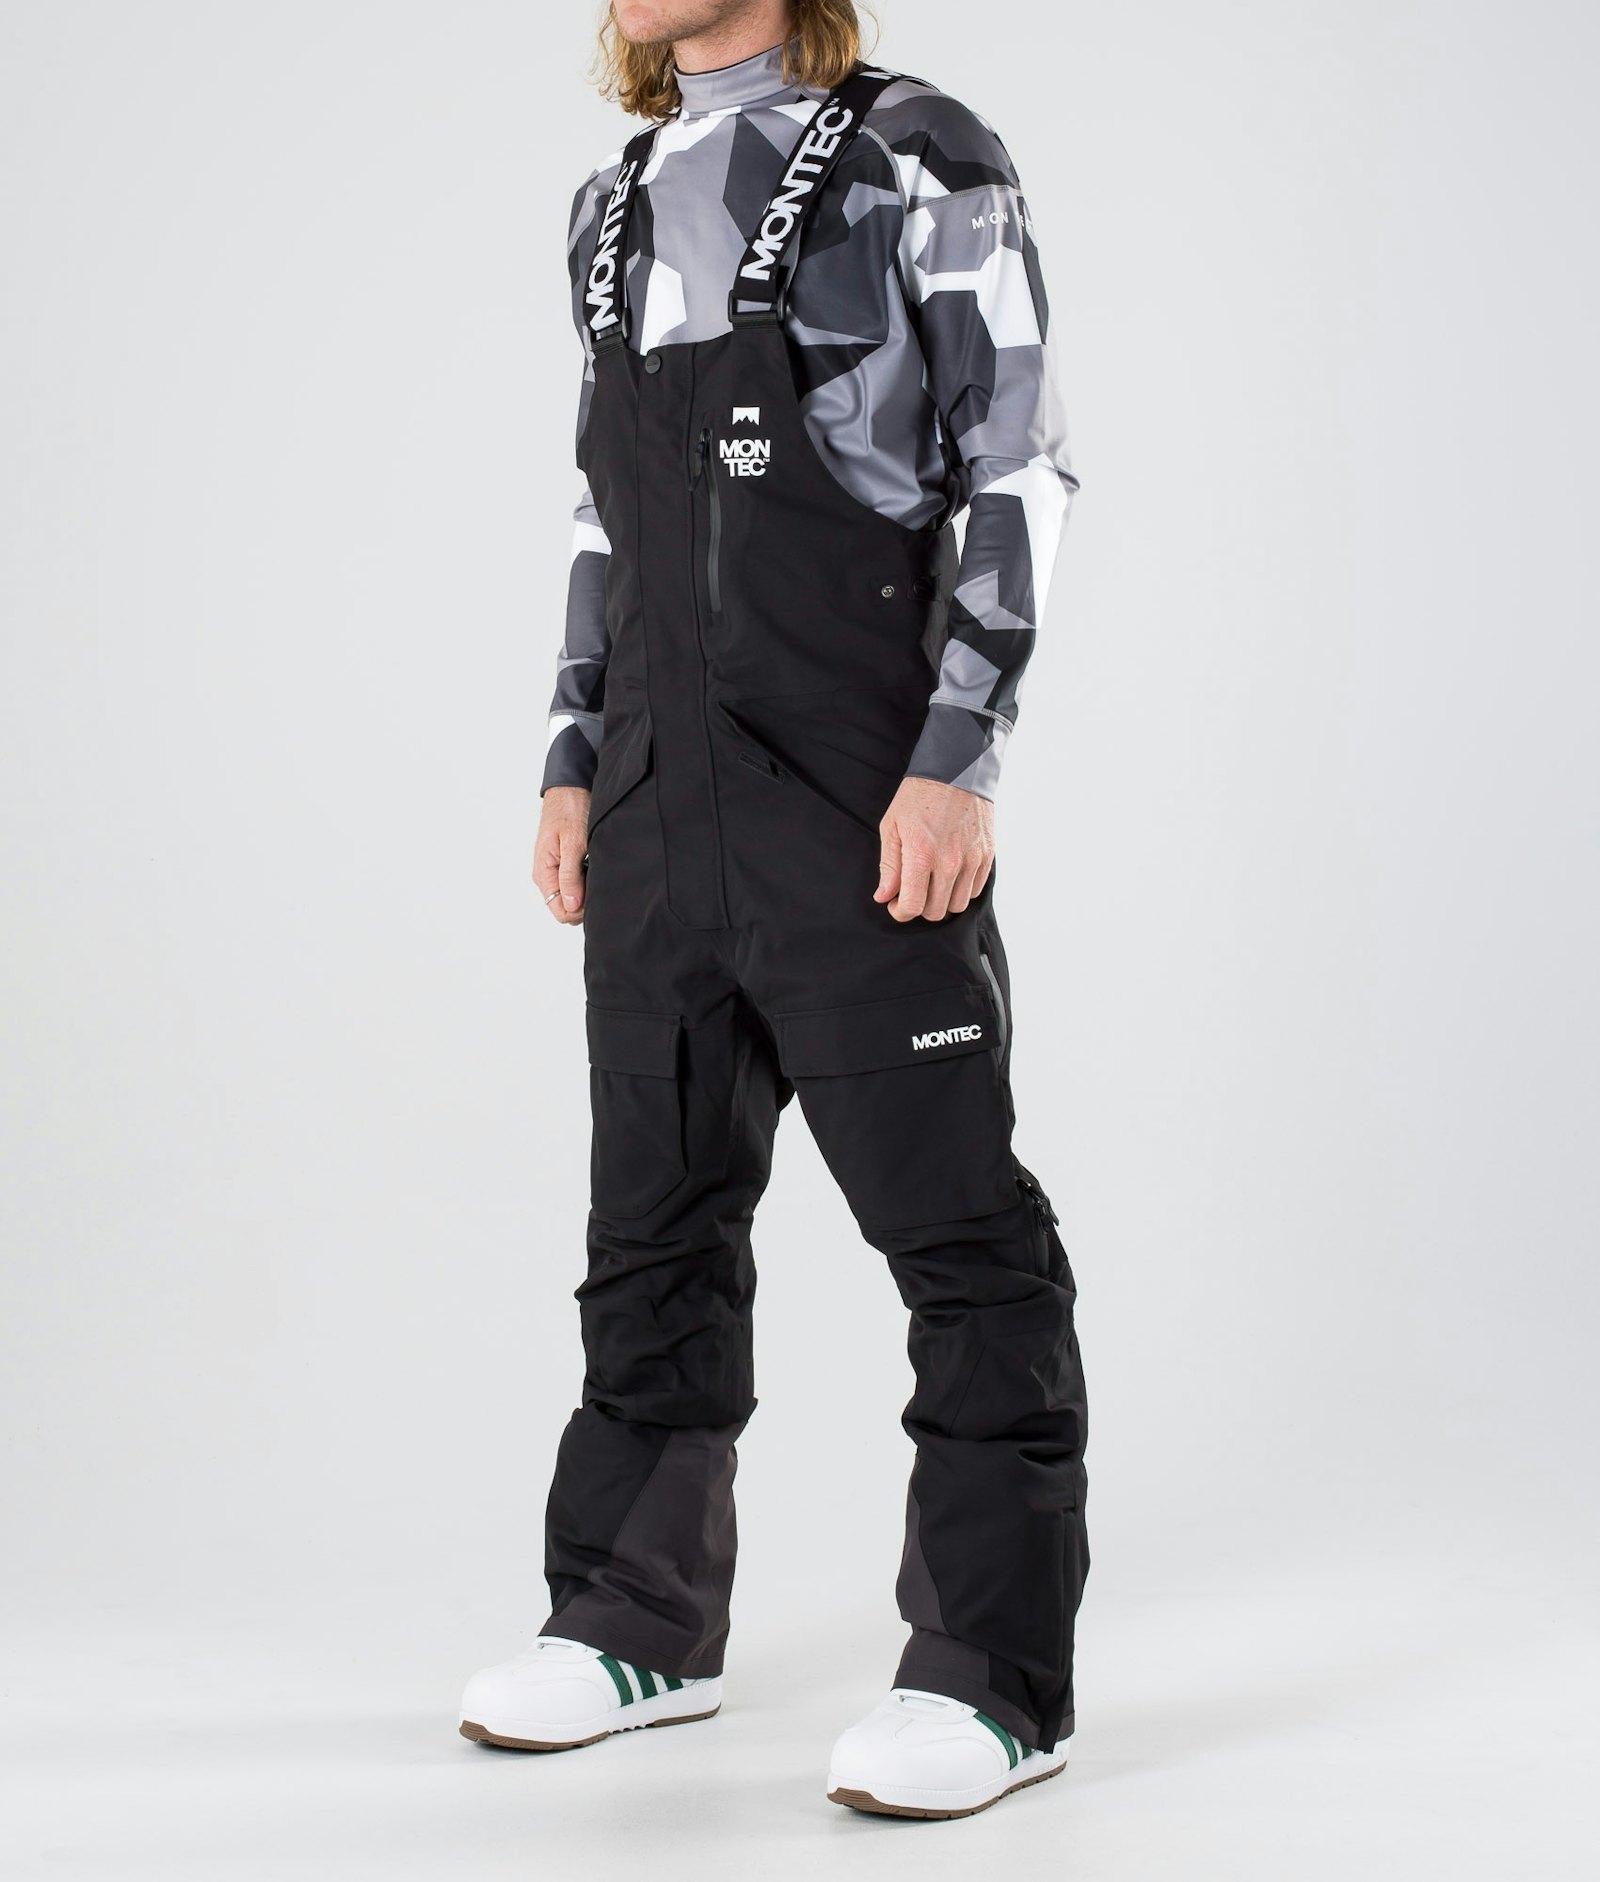 Fawk 2019 Pantalon de Snowboard Homme Black